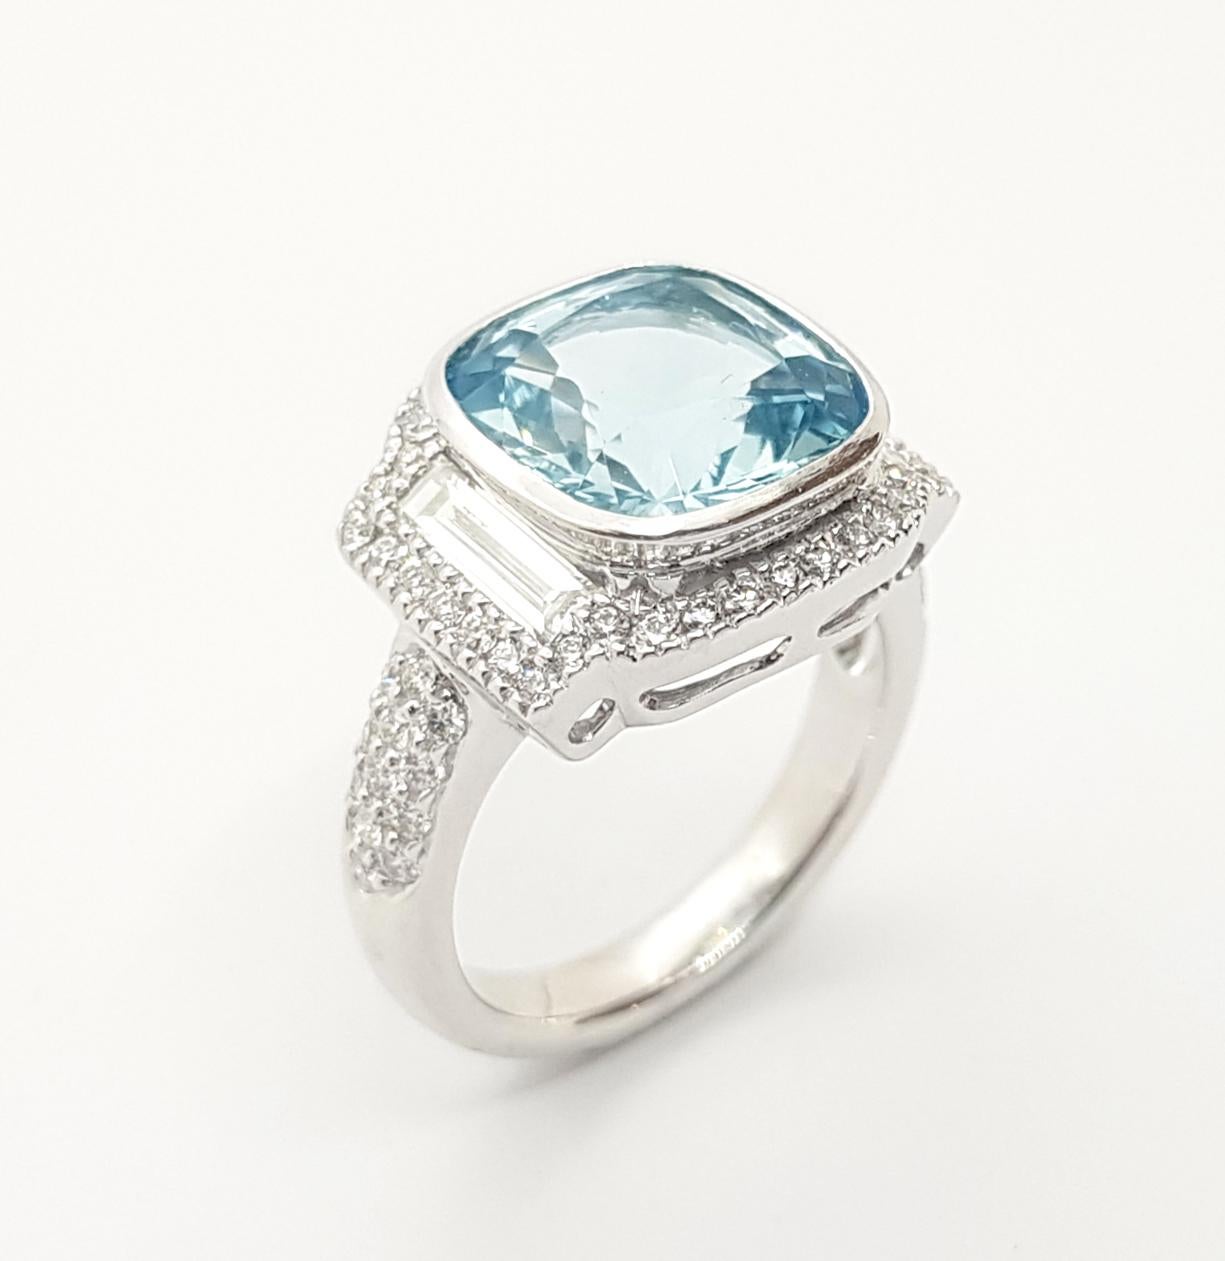 Aquamarine with Diamond Ring set in Platinum 900 Setting For Sale 2